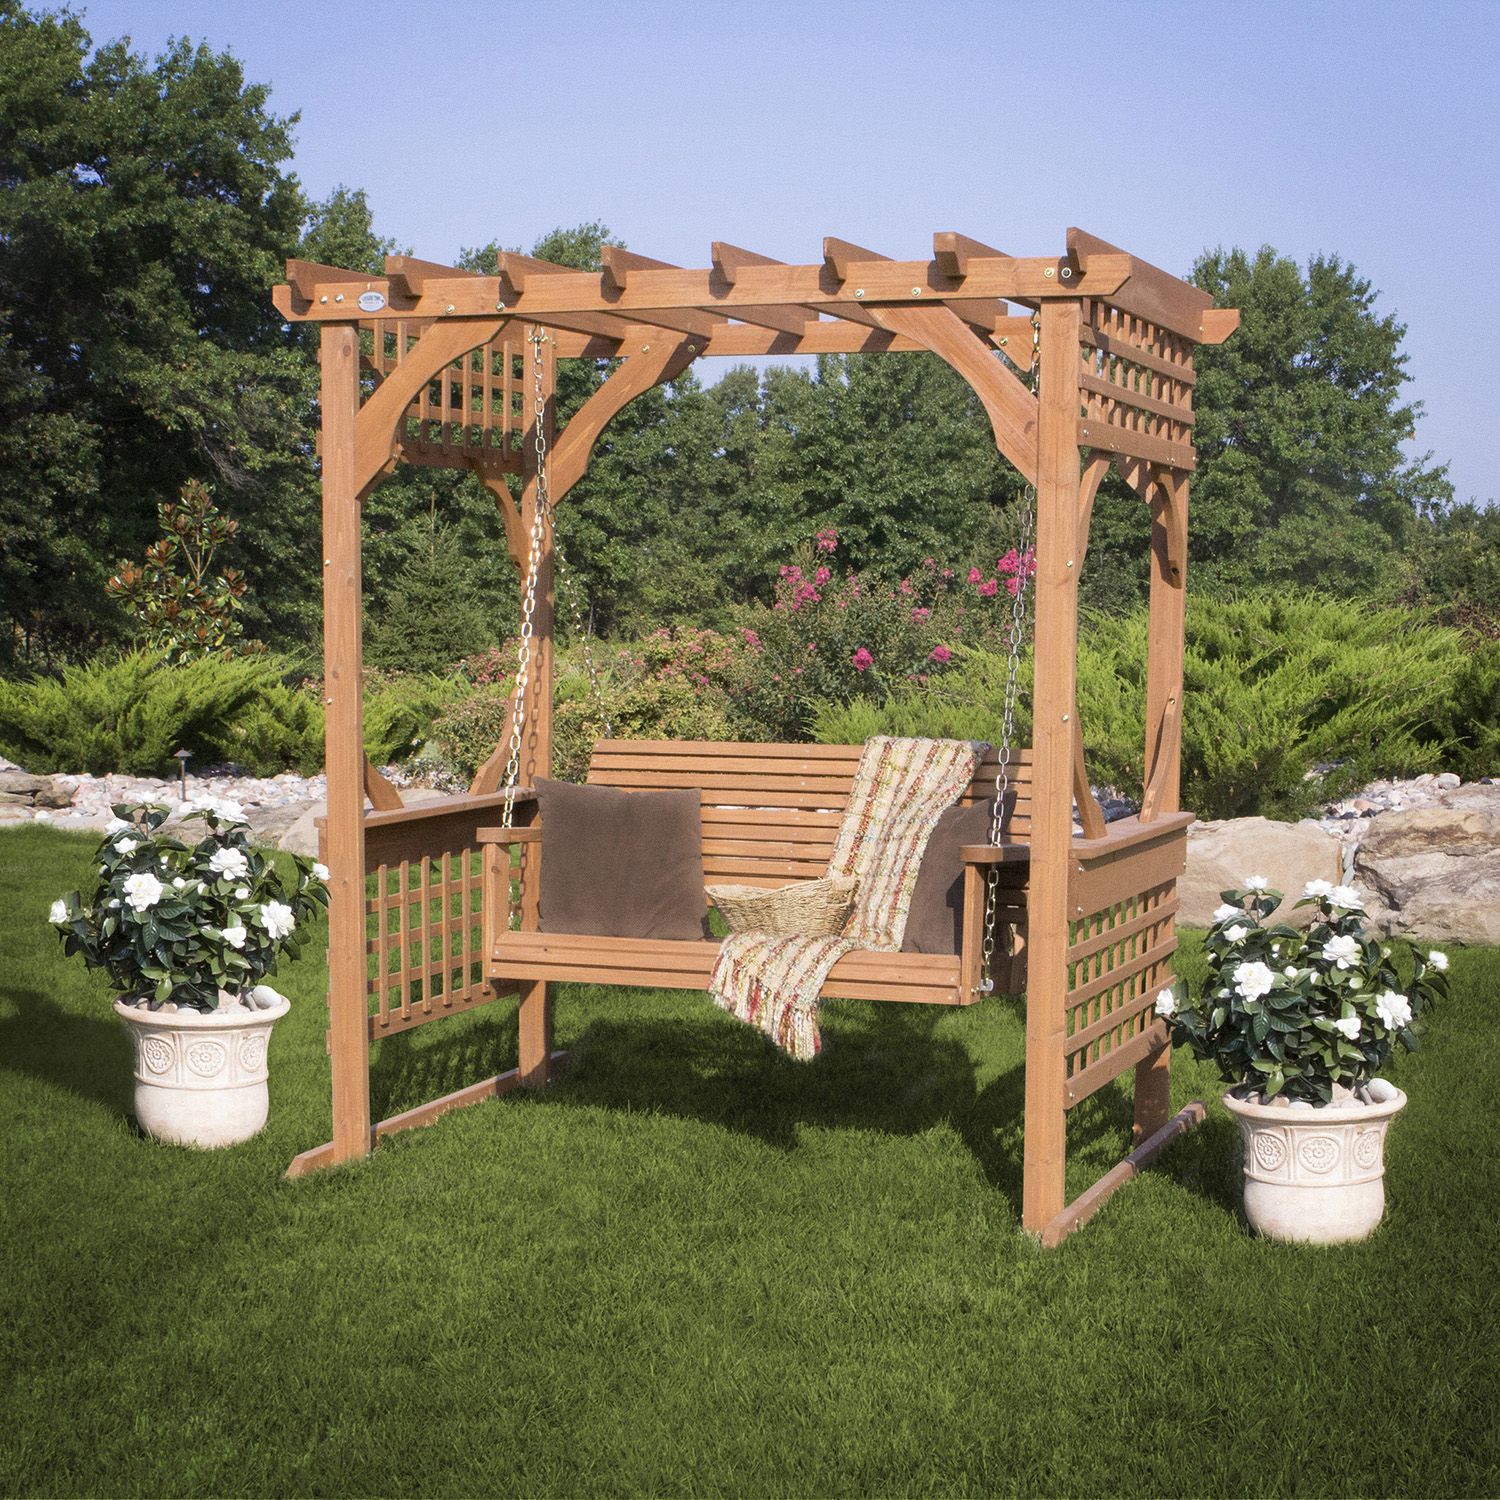 15 Beautiful Wooden Swings | Home Design, Garden & Architecture Blog ...